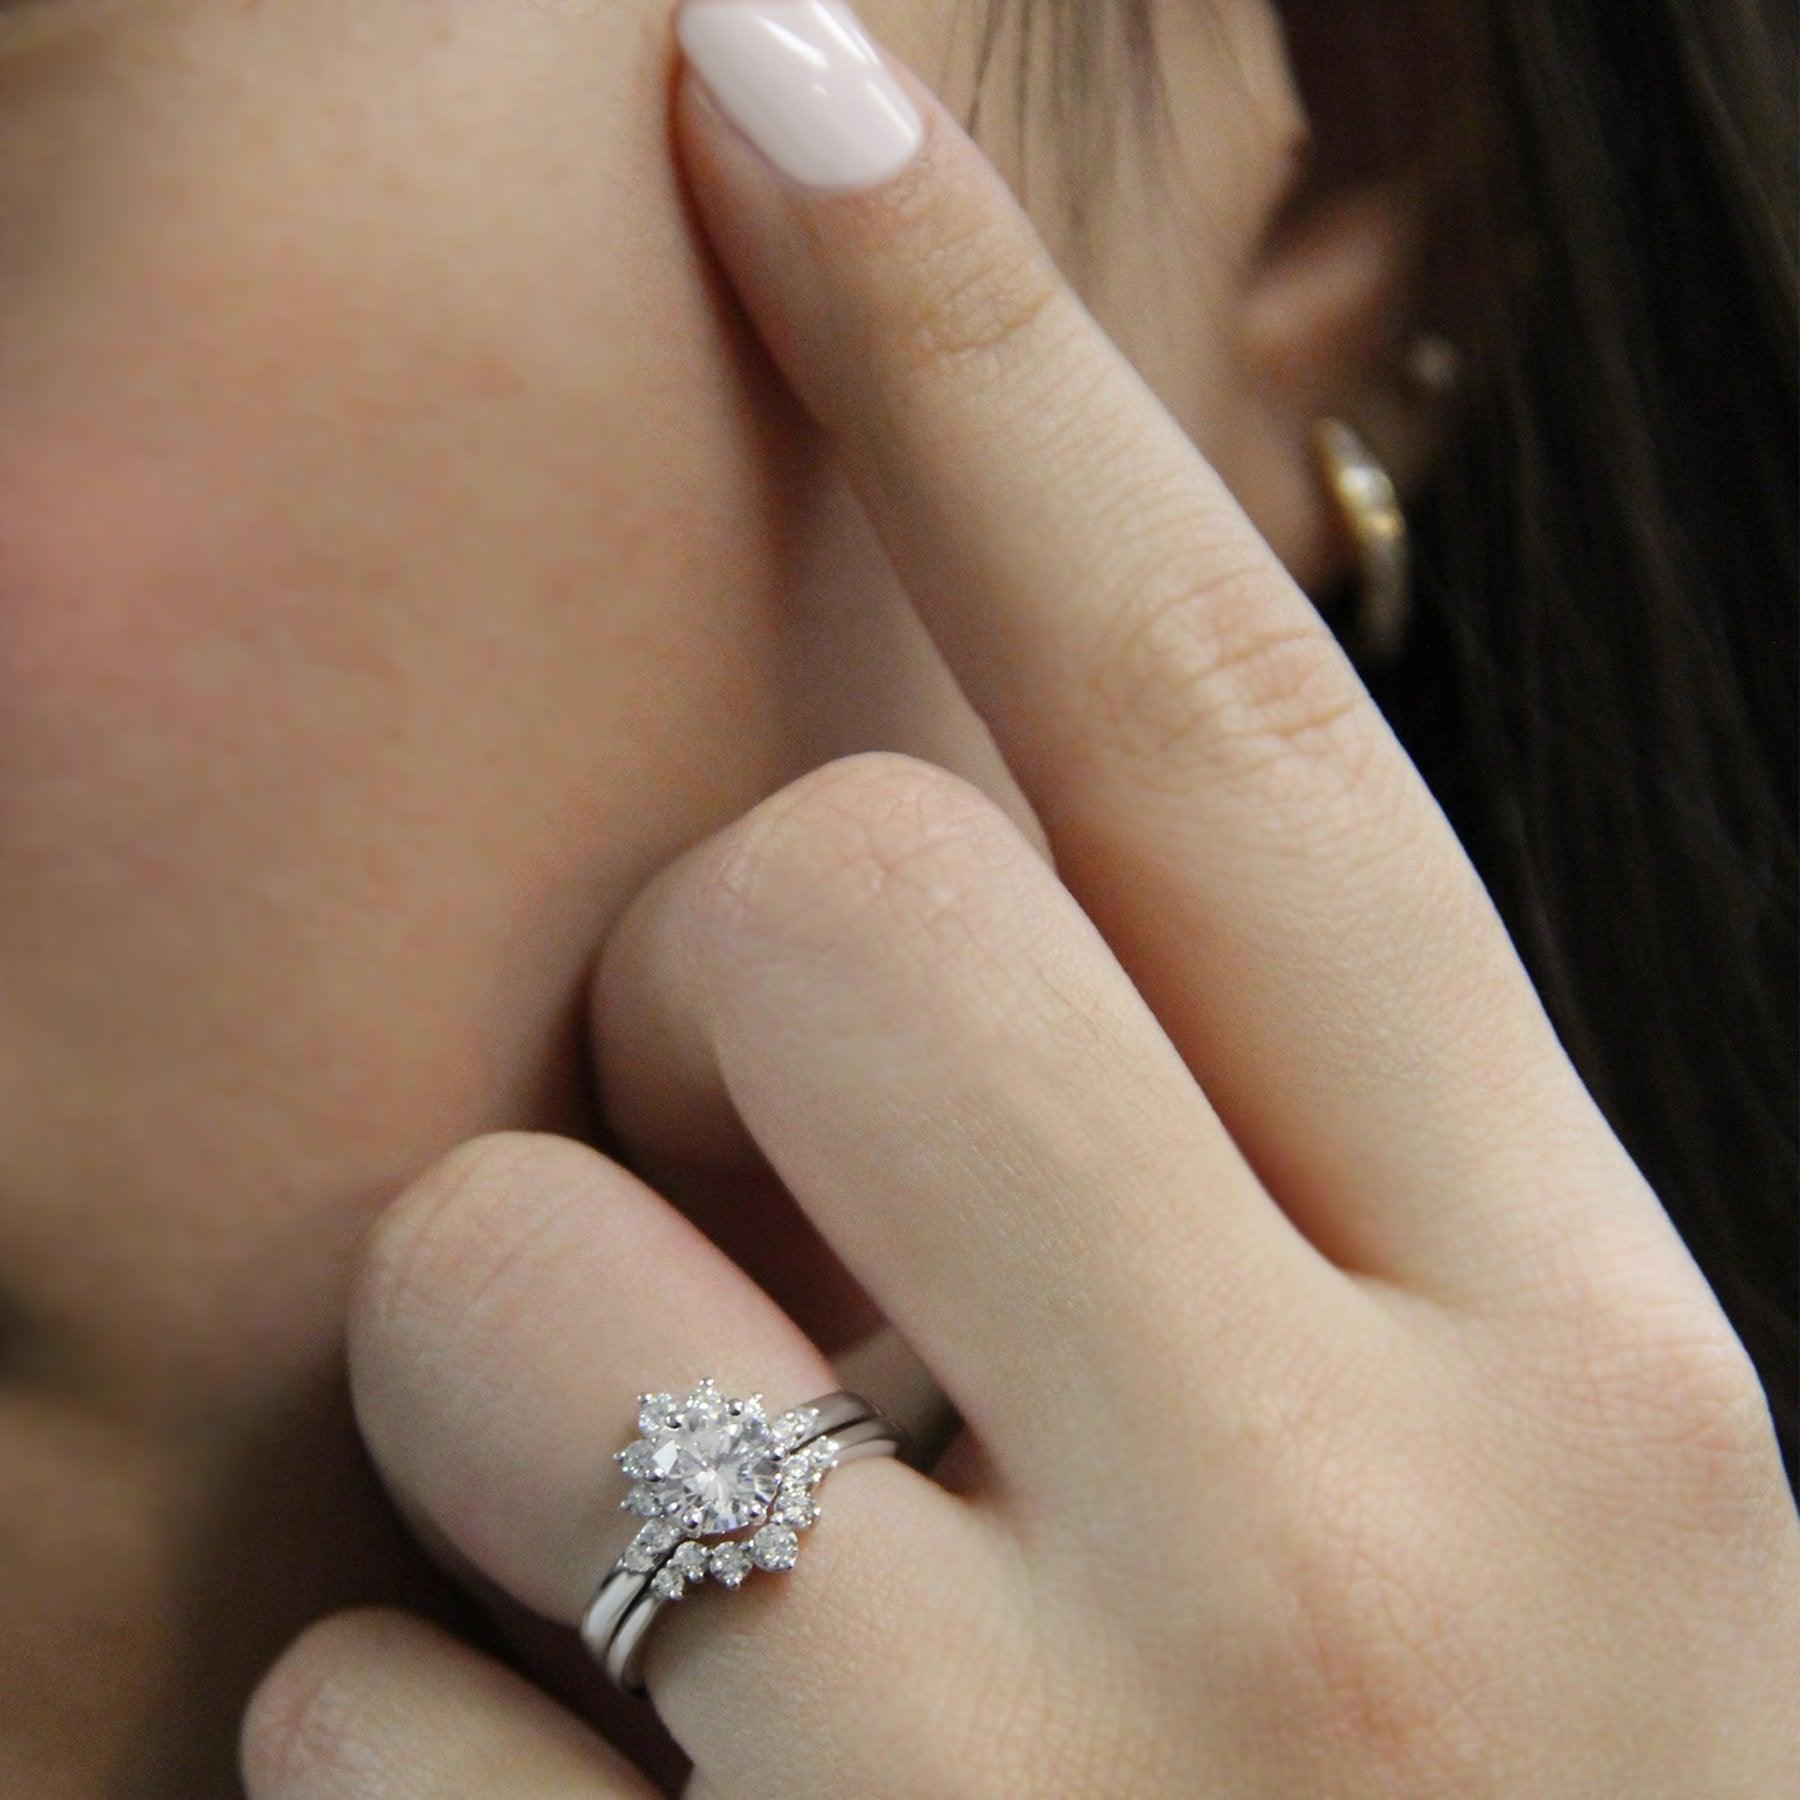 BW JAMES Engagement Rings "The Iona" Halo Semi-Mount Diamond Ring